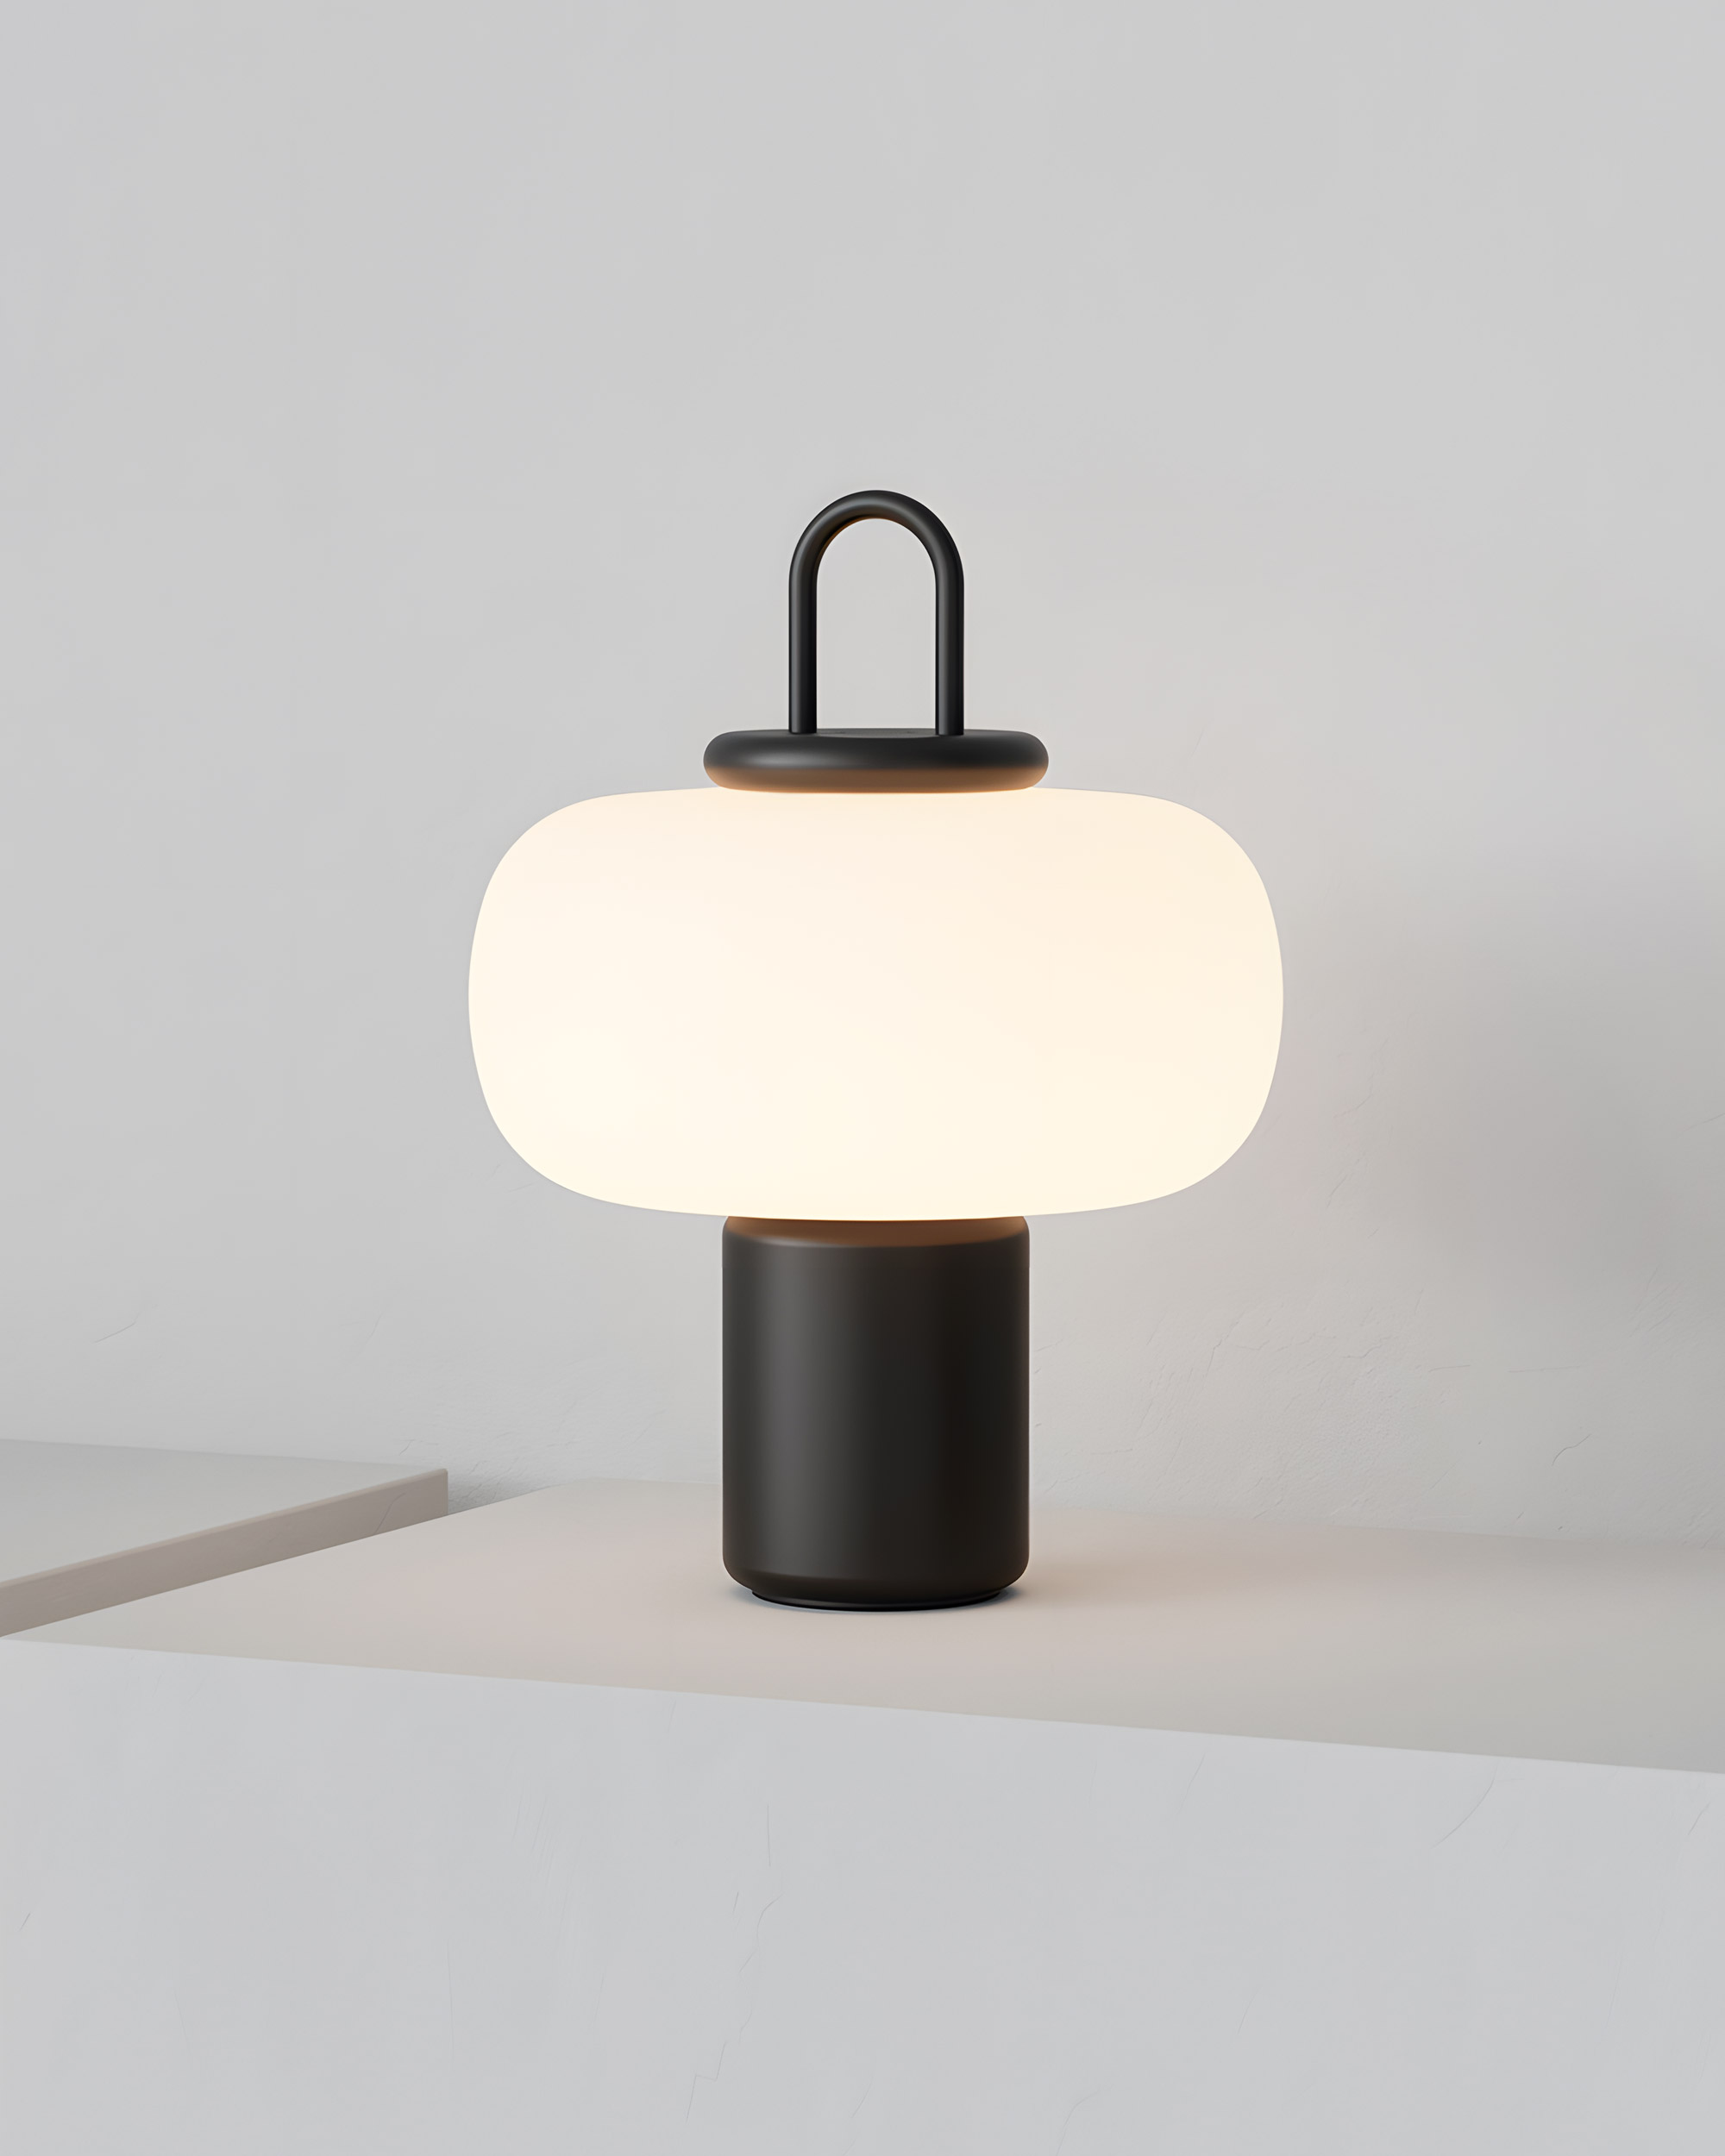 Minimalist Table Lamp "Nox" by Alfred Häberli | Aesence